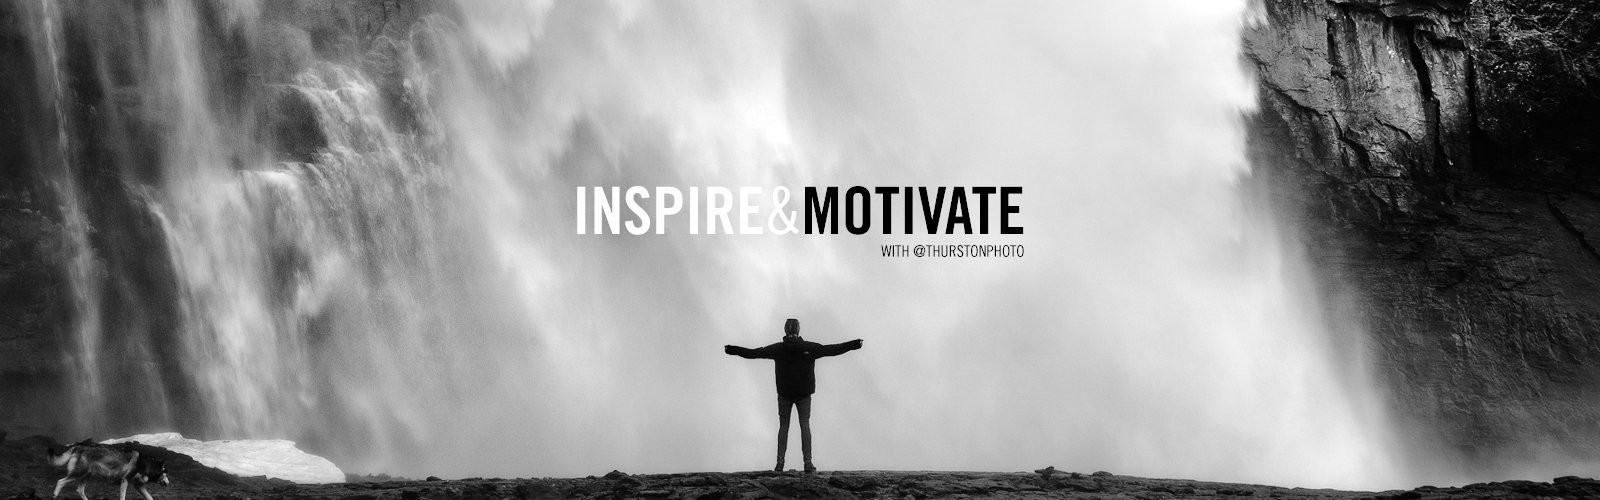 Inspirational And Motivational Quotes
 Original Inspirational and Motivational Quotes by Thurston